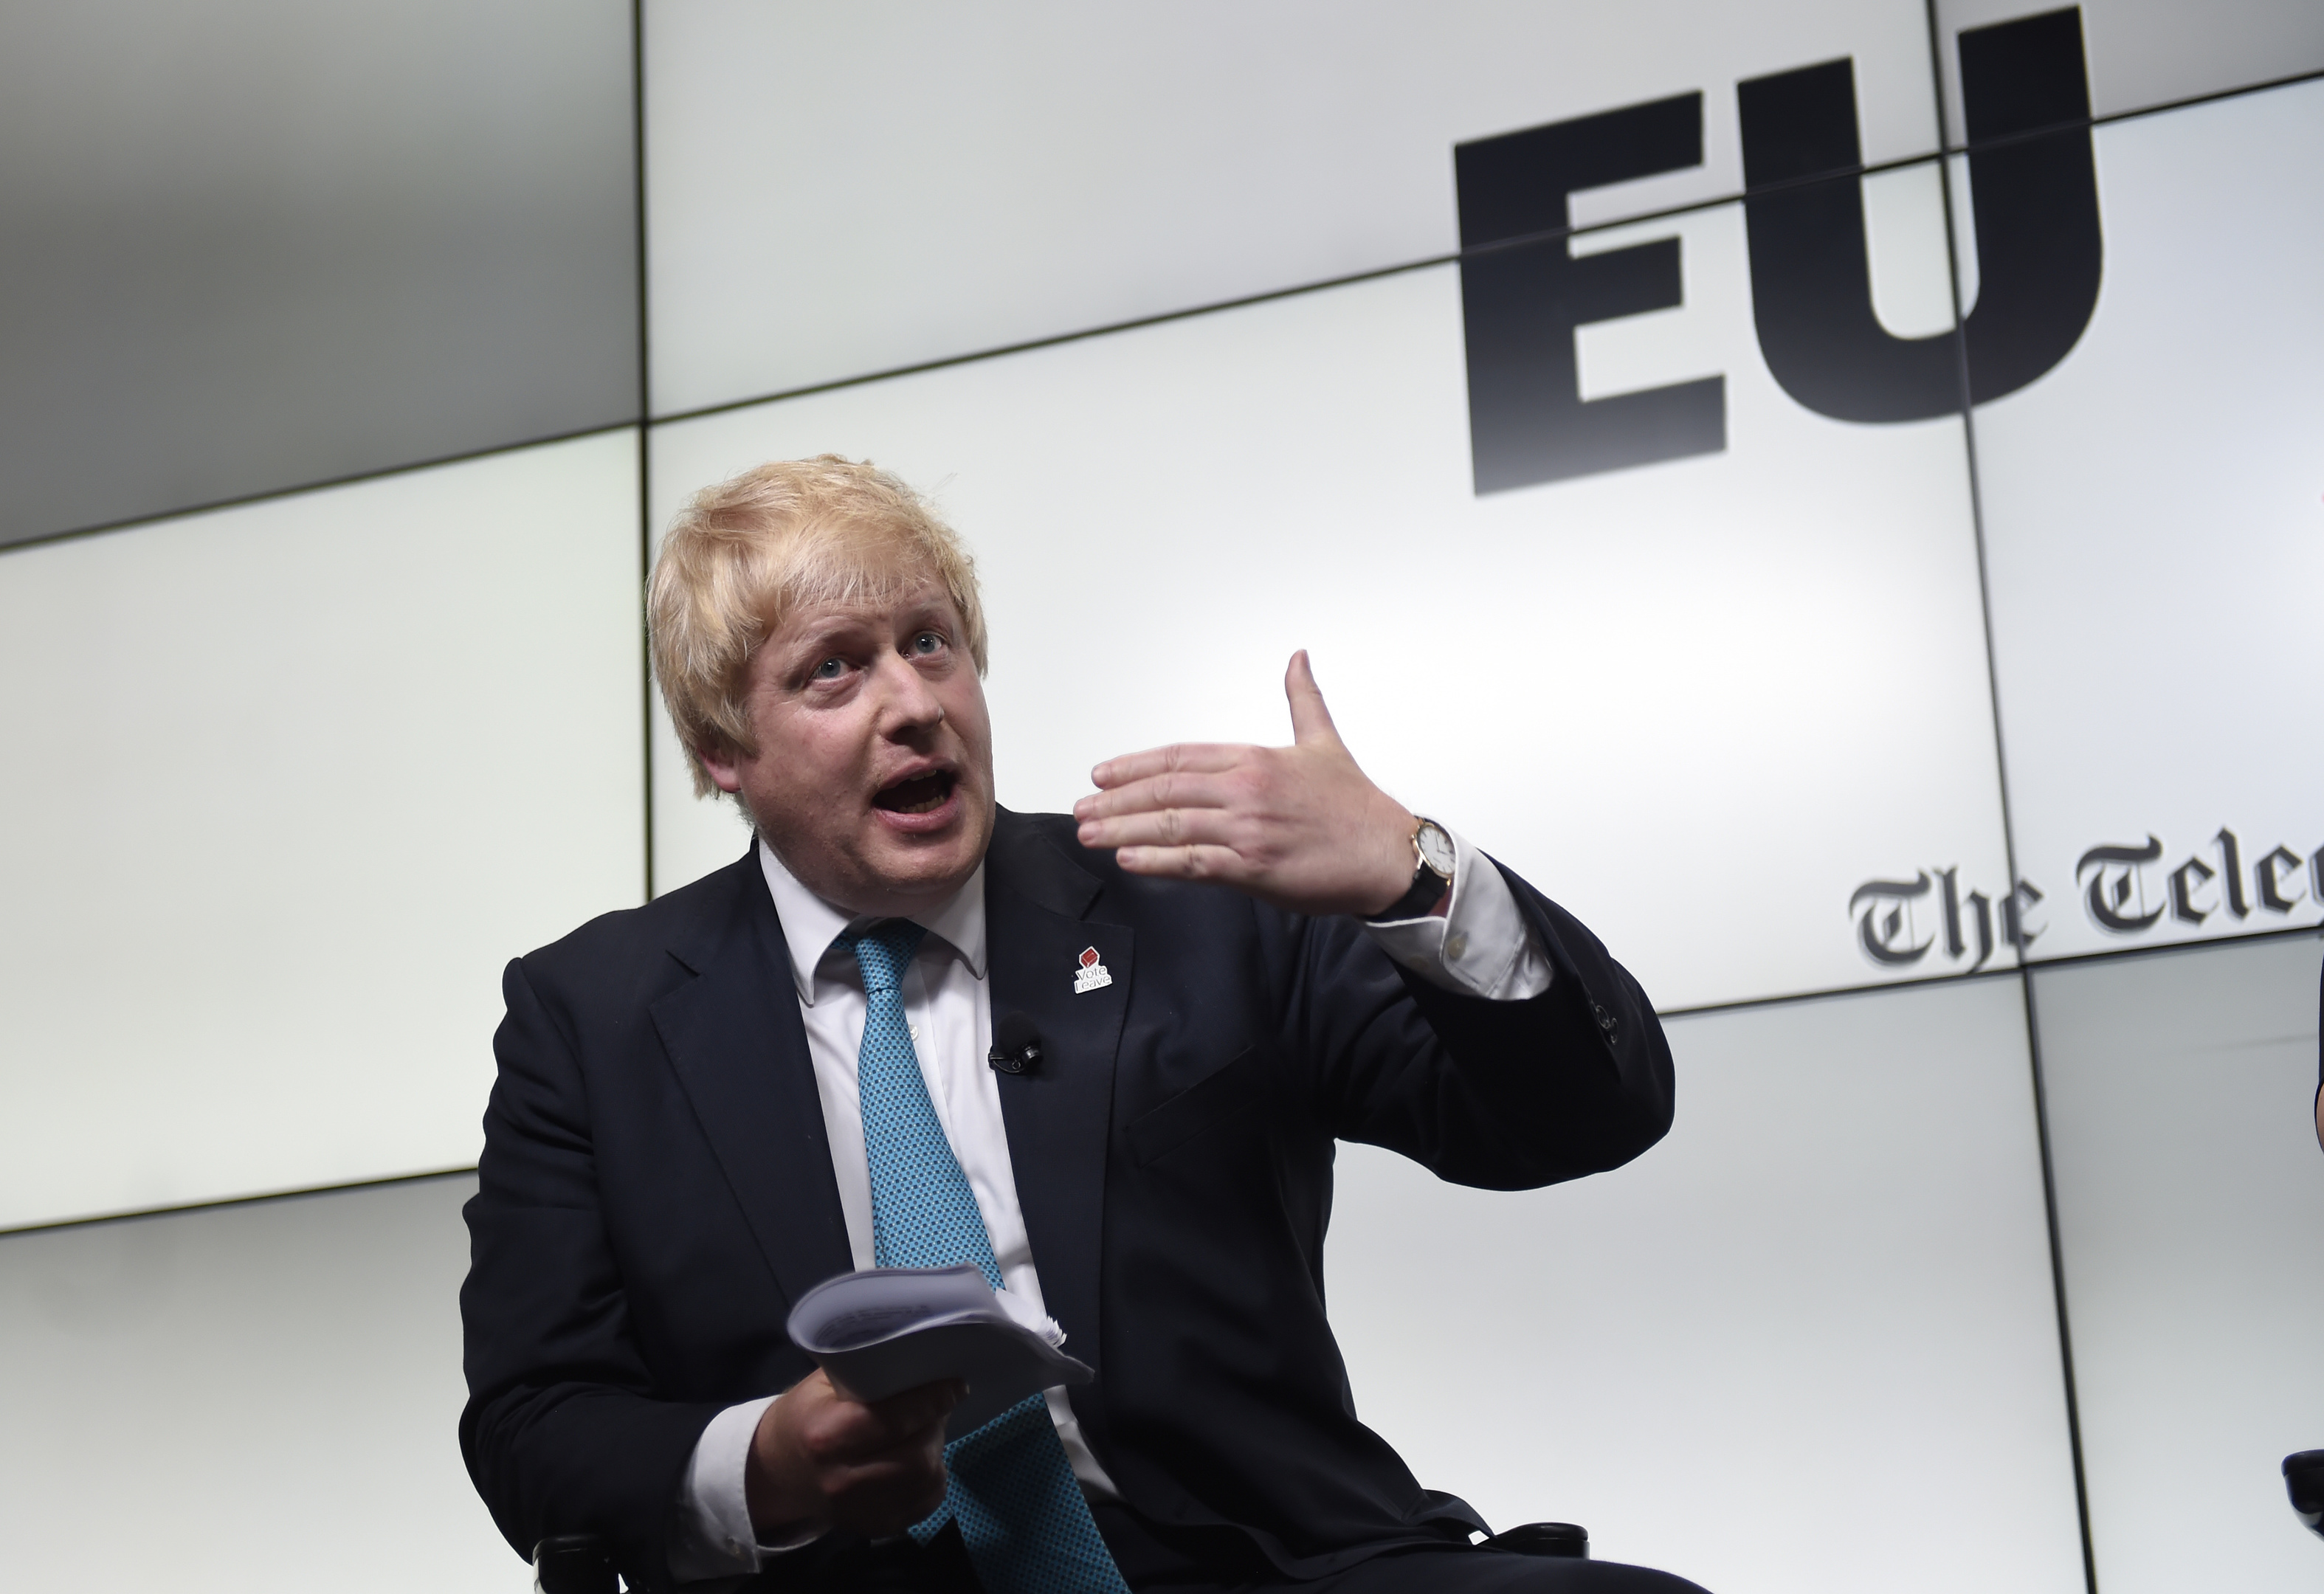 Boris Johnson taking part in a Huffington Post/Daily Telegraph EU debate in London (David Rose/The Daily Telegraph/PA)